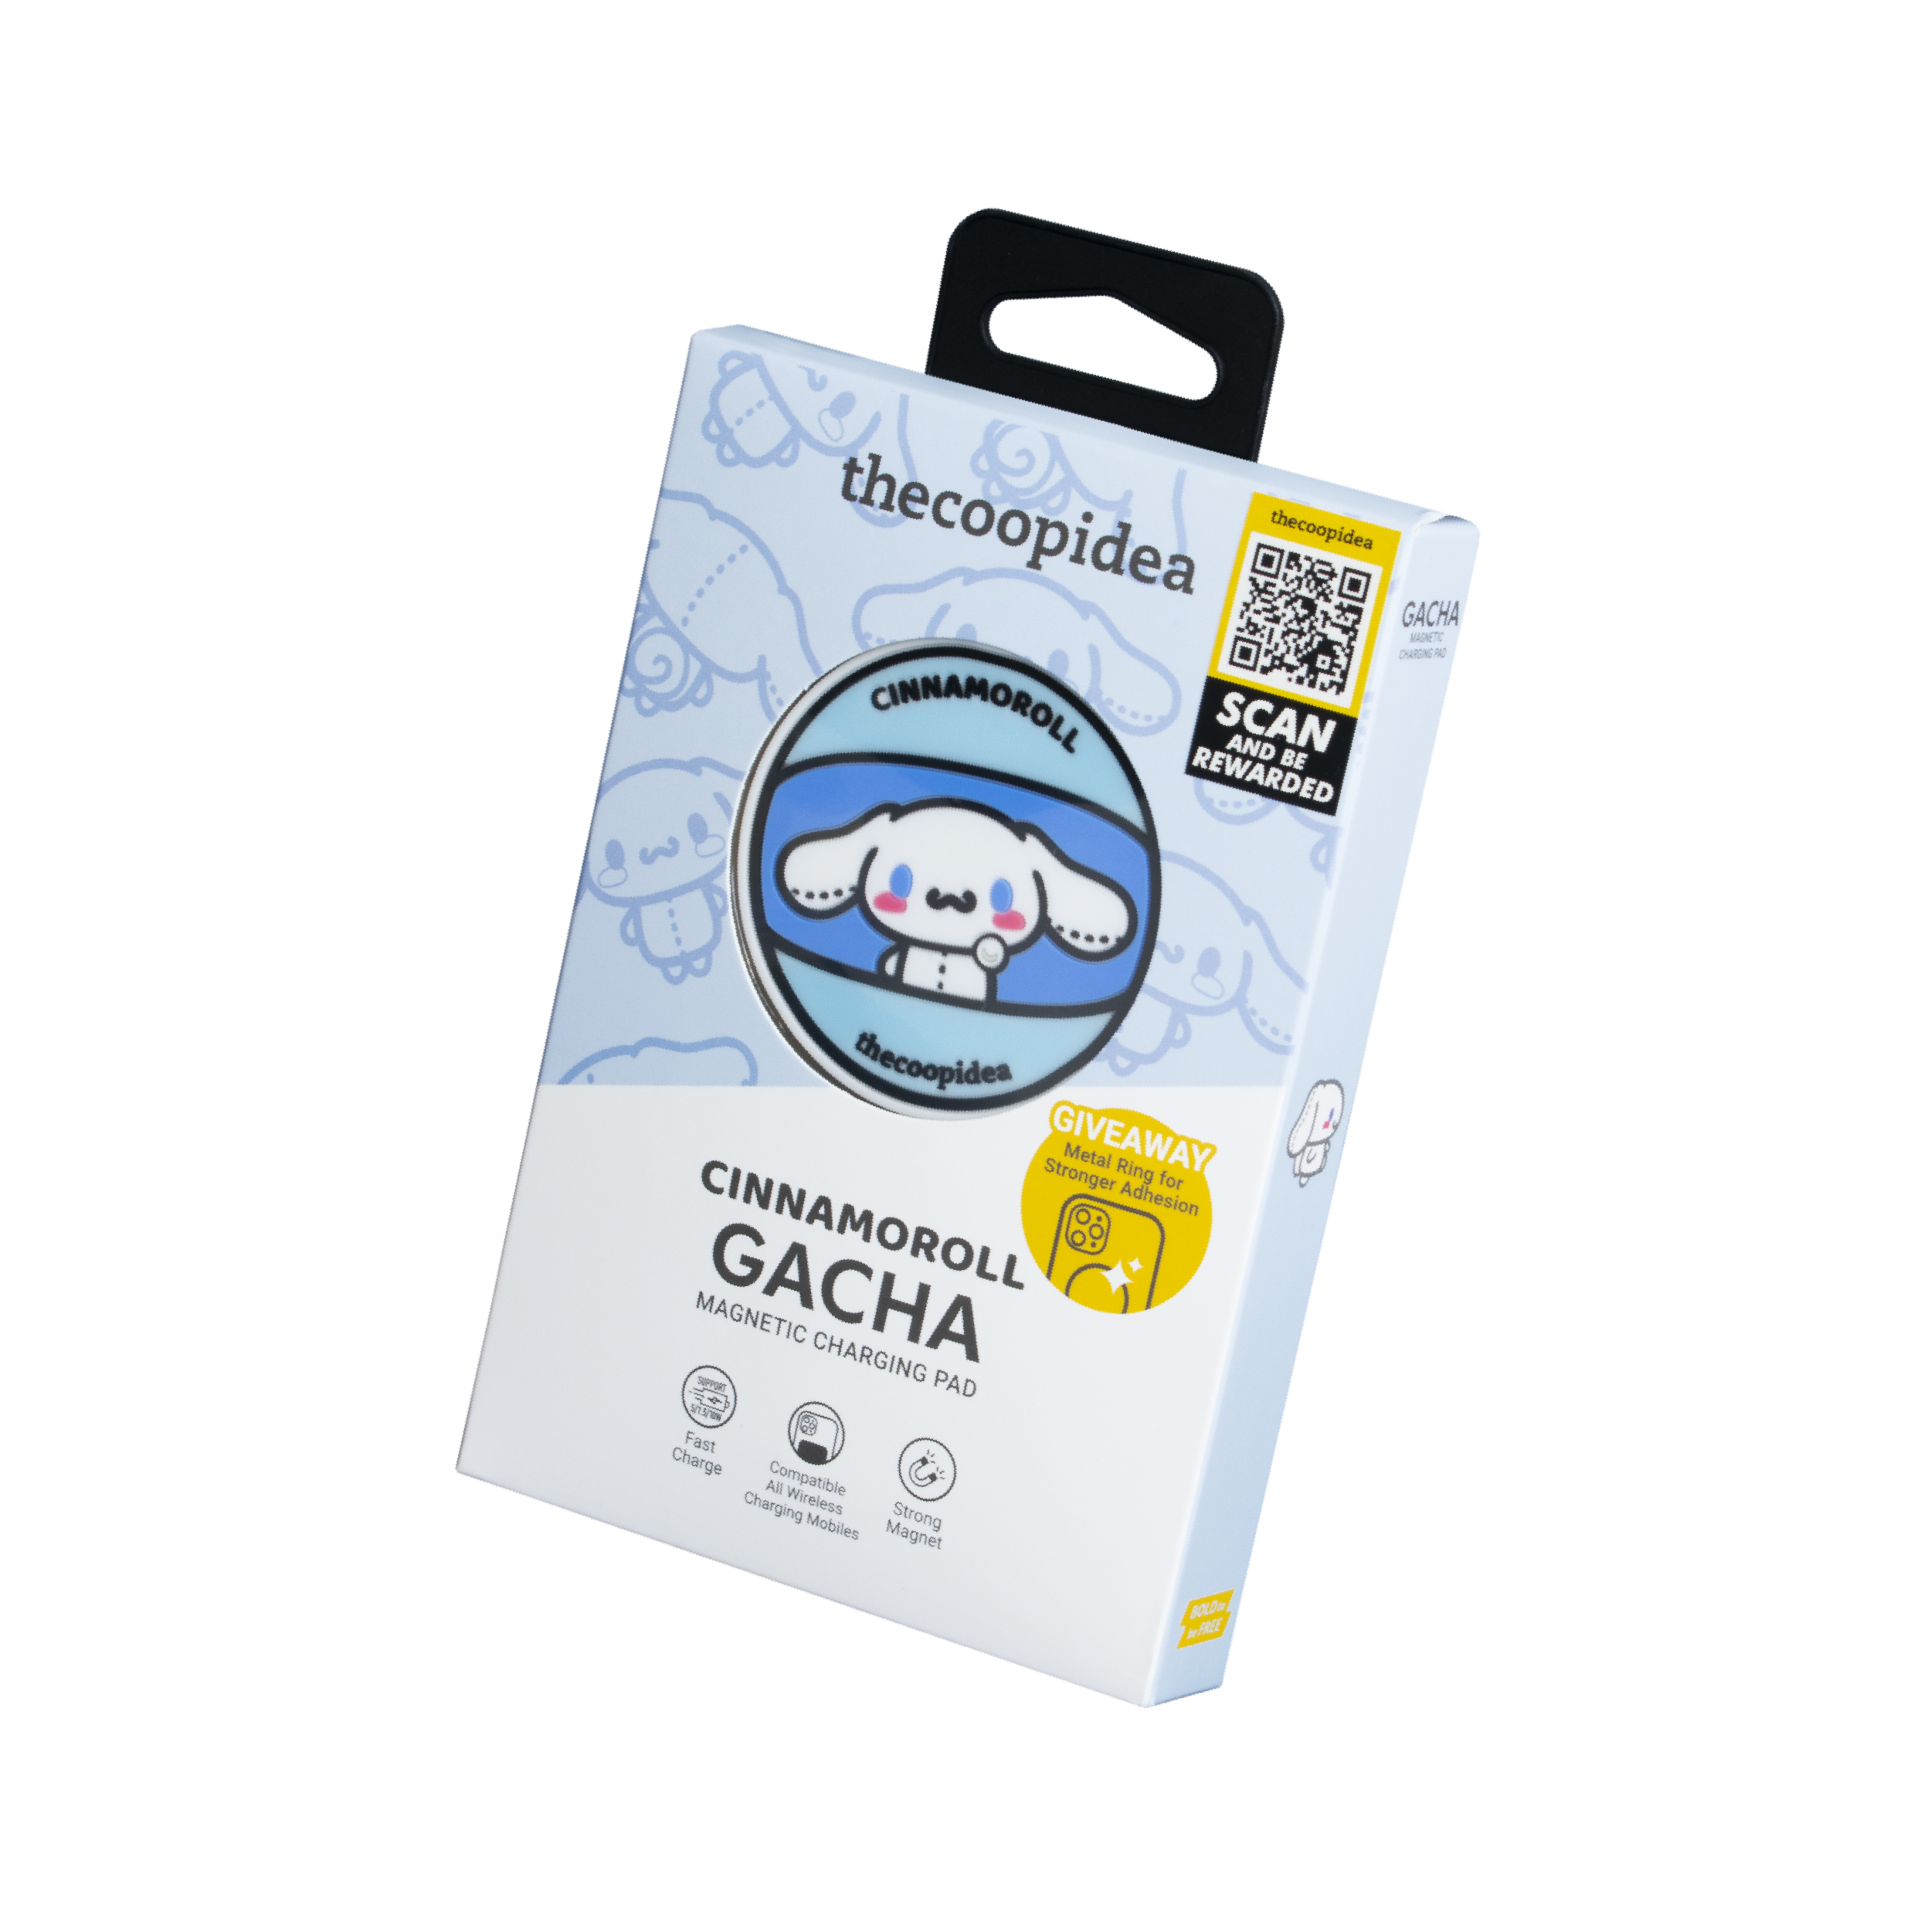 Sanrio GACHA Magnetic Charging Pad - Cinnamoroll